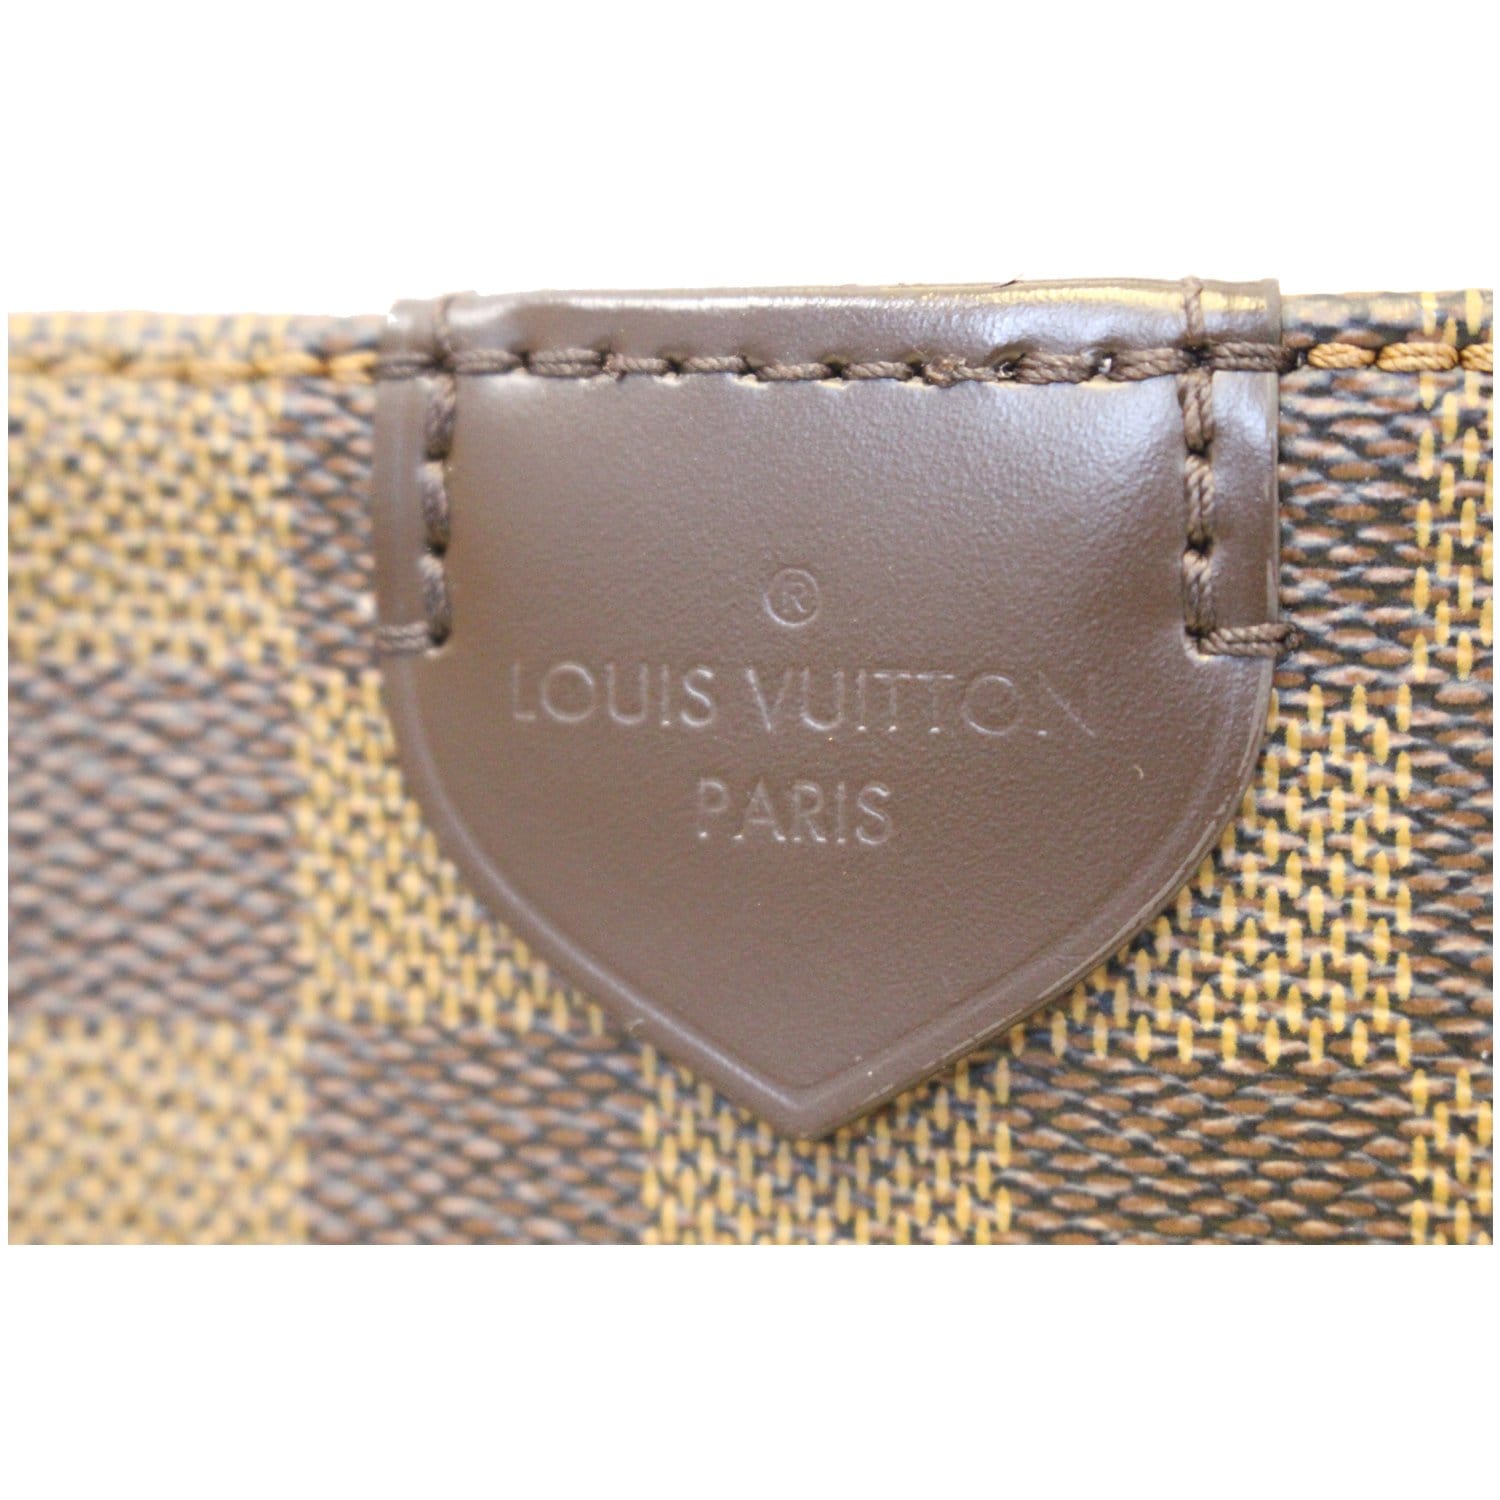 Review & Unboxing - Louis Vuitton Caissa Hobo 